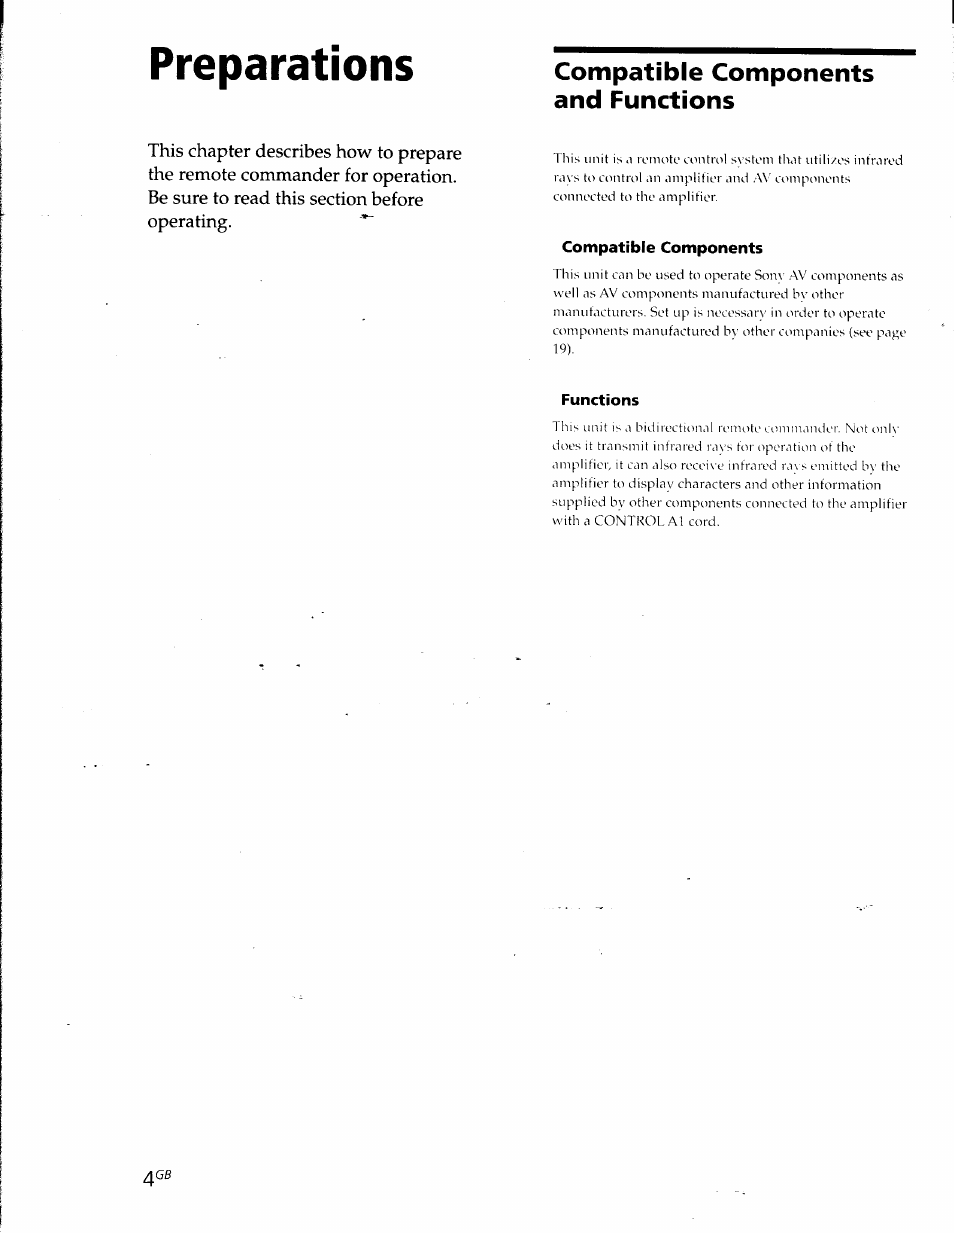 Compatible components, Functions, Preparations | Compatible components and functions | Sony RM-TP501E Manuel d'utilisation | Page 4 / 49